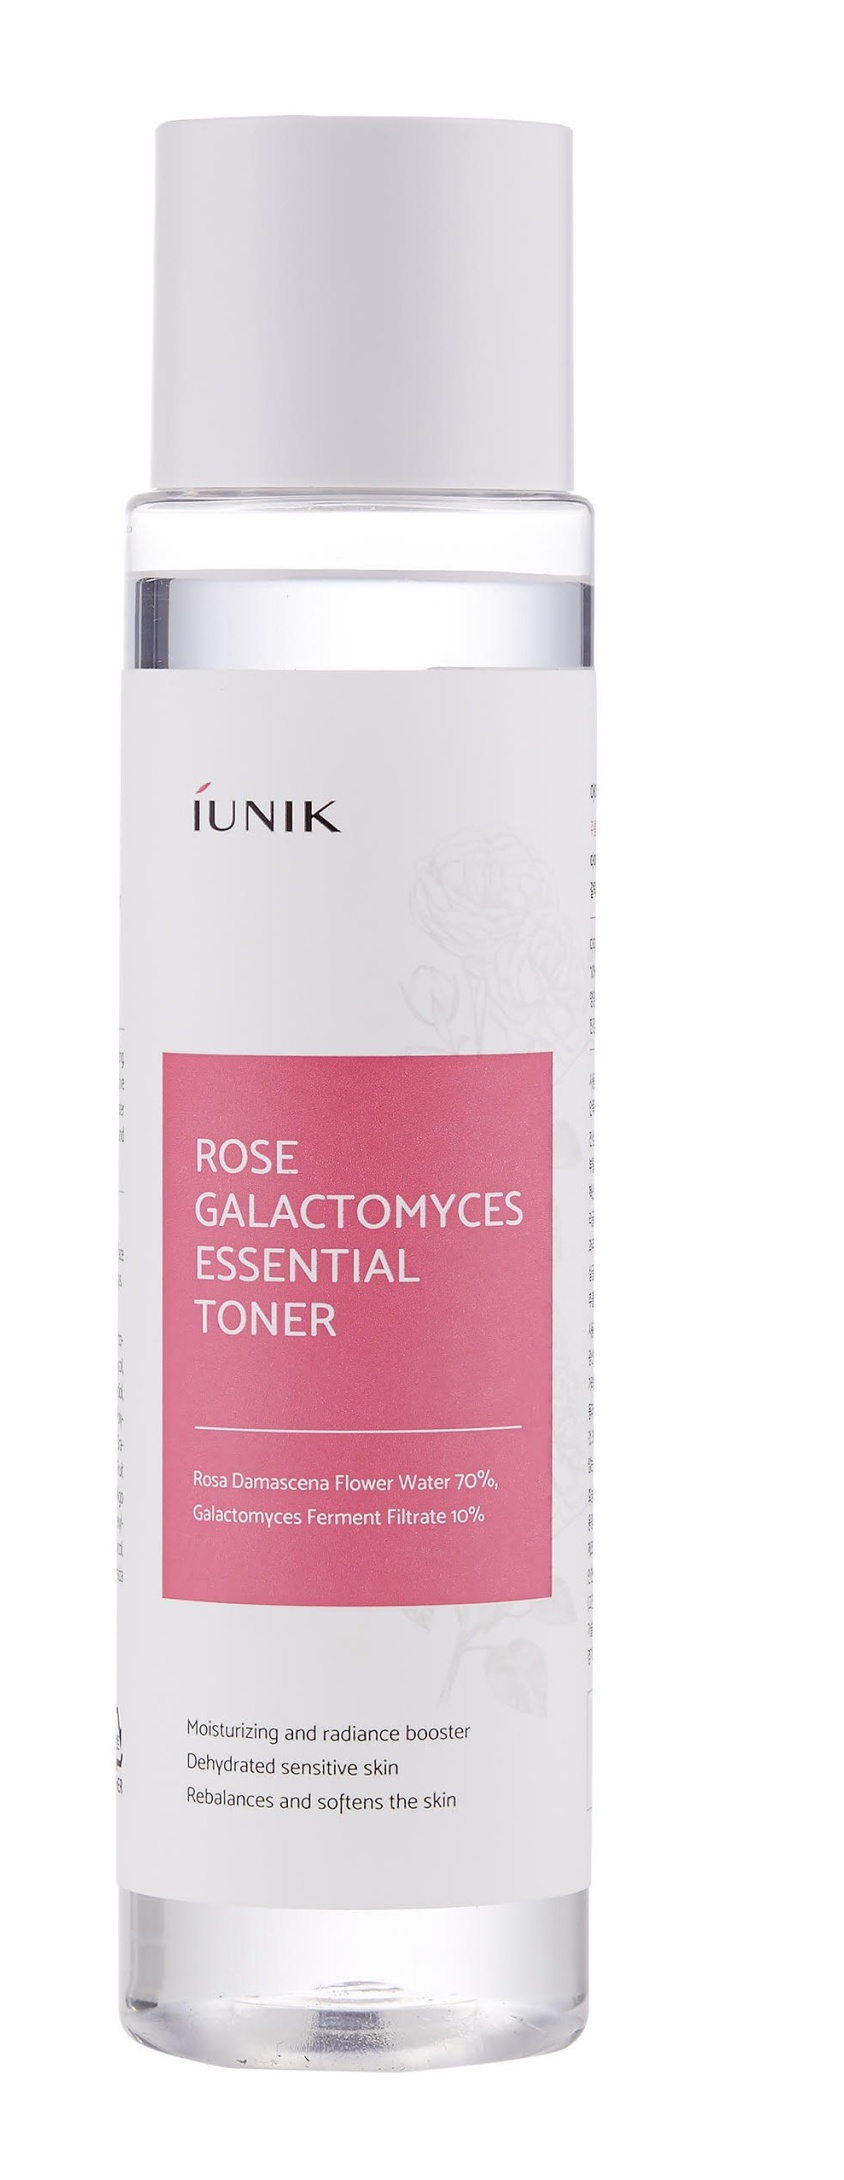 iUnik Rose Galactomyces Essential Toner